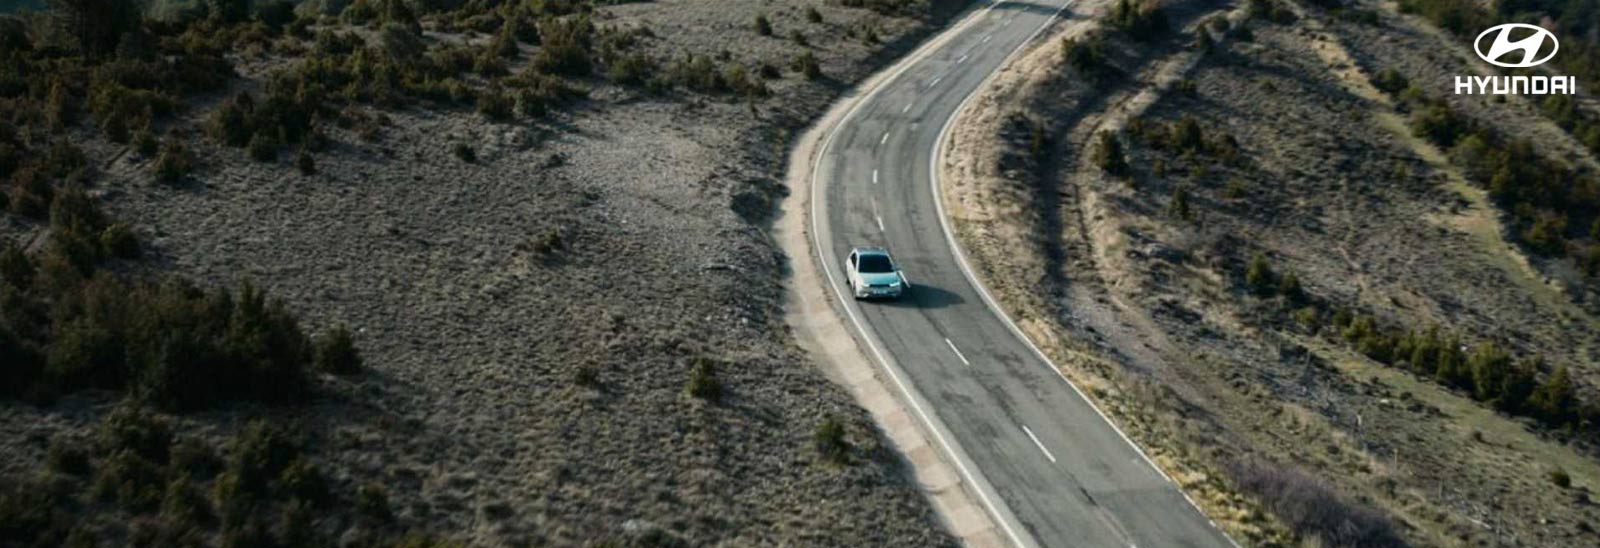 Auto Hyundai circulando por carretera en un terreno desértico